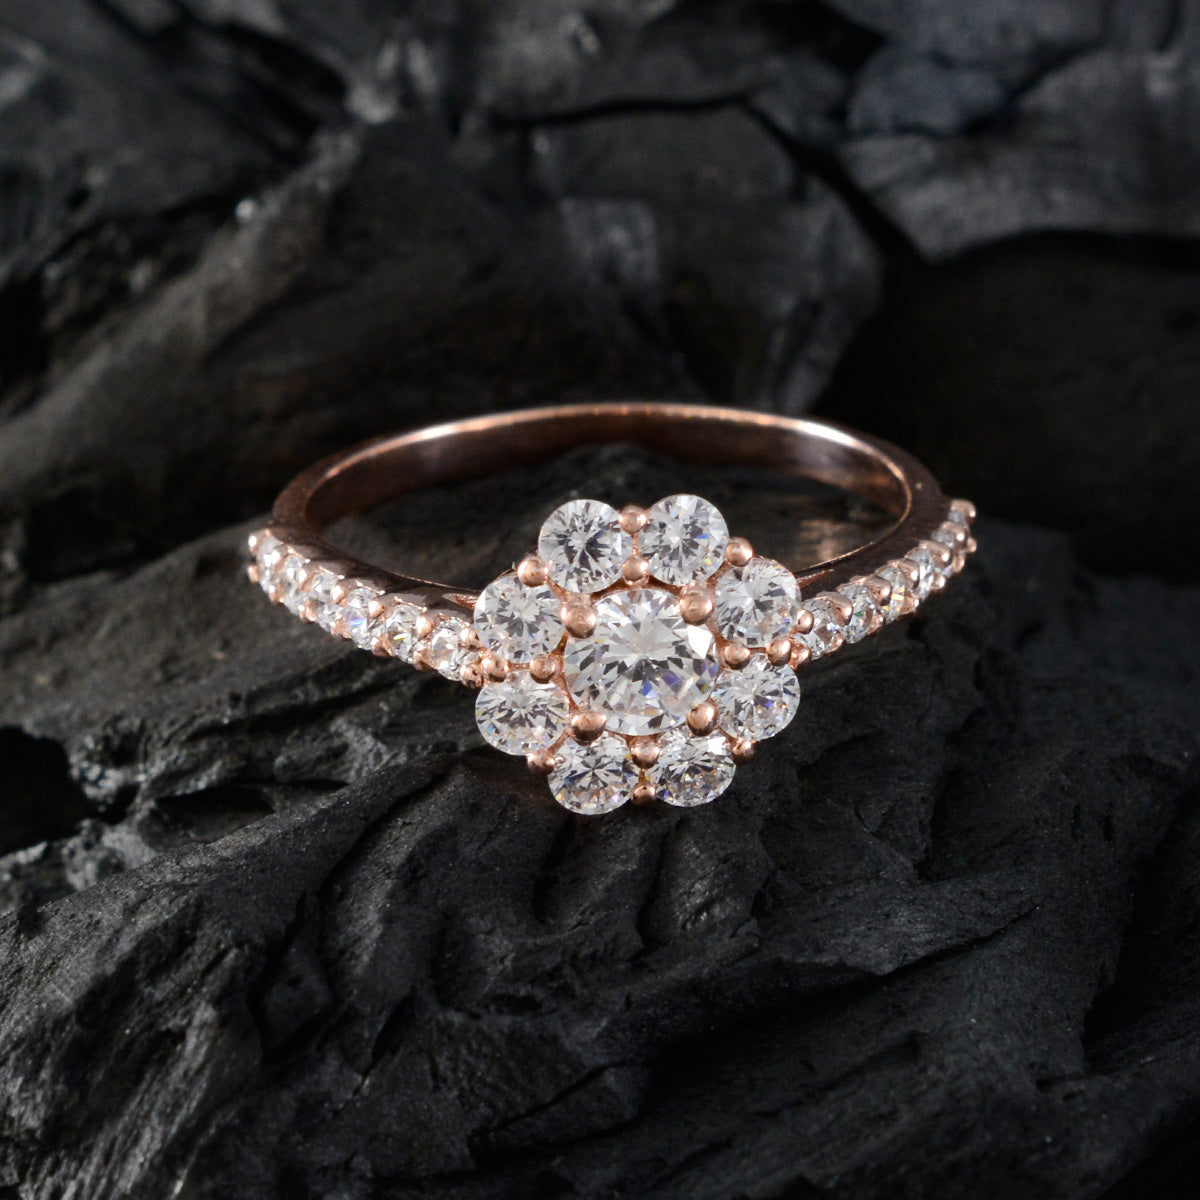 Riyo suministra anillo de plata con chapado en oro rosa, piedra blanca cz, ajuste de punta redonda, joyería de moda, anillo de compromiso